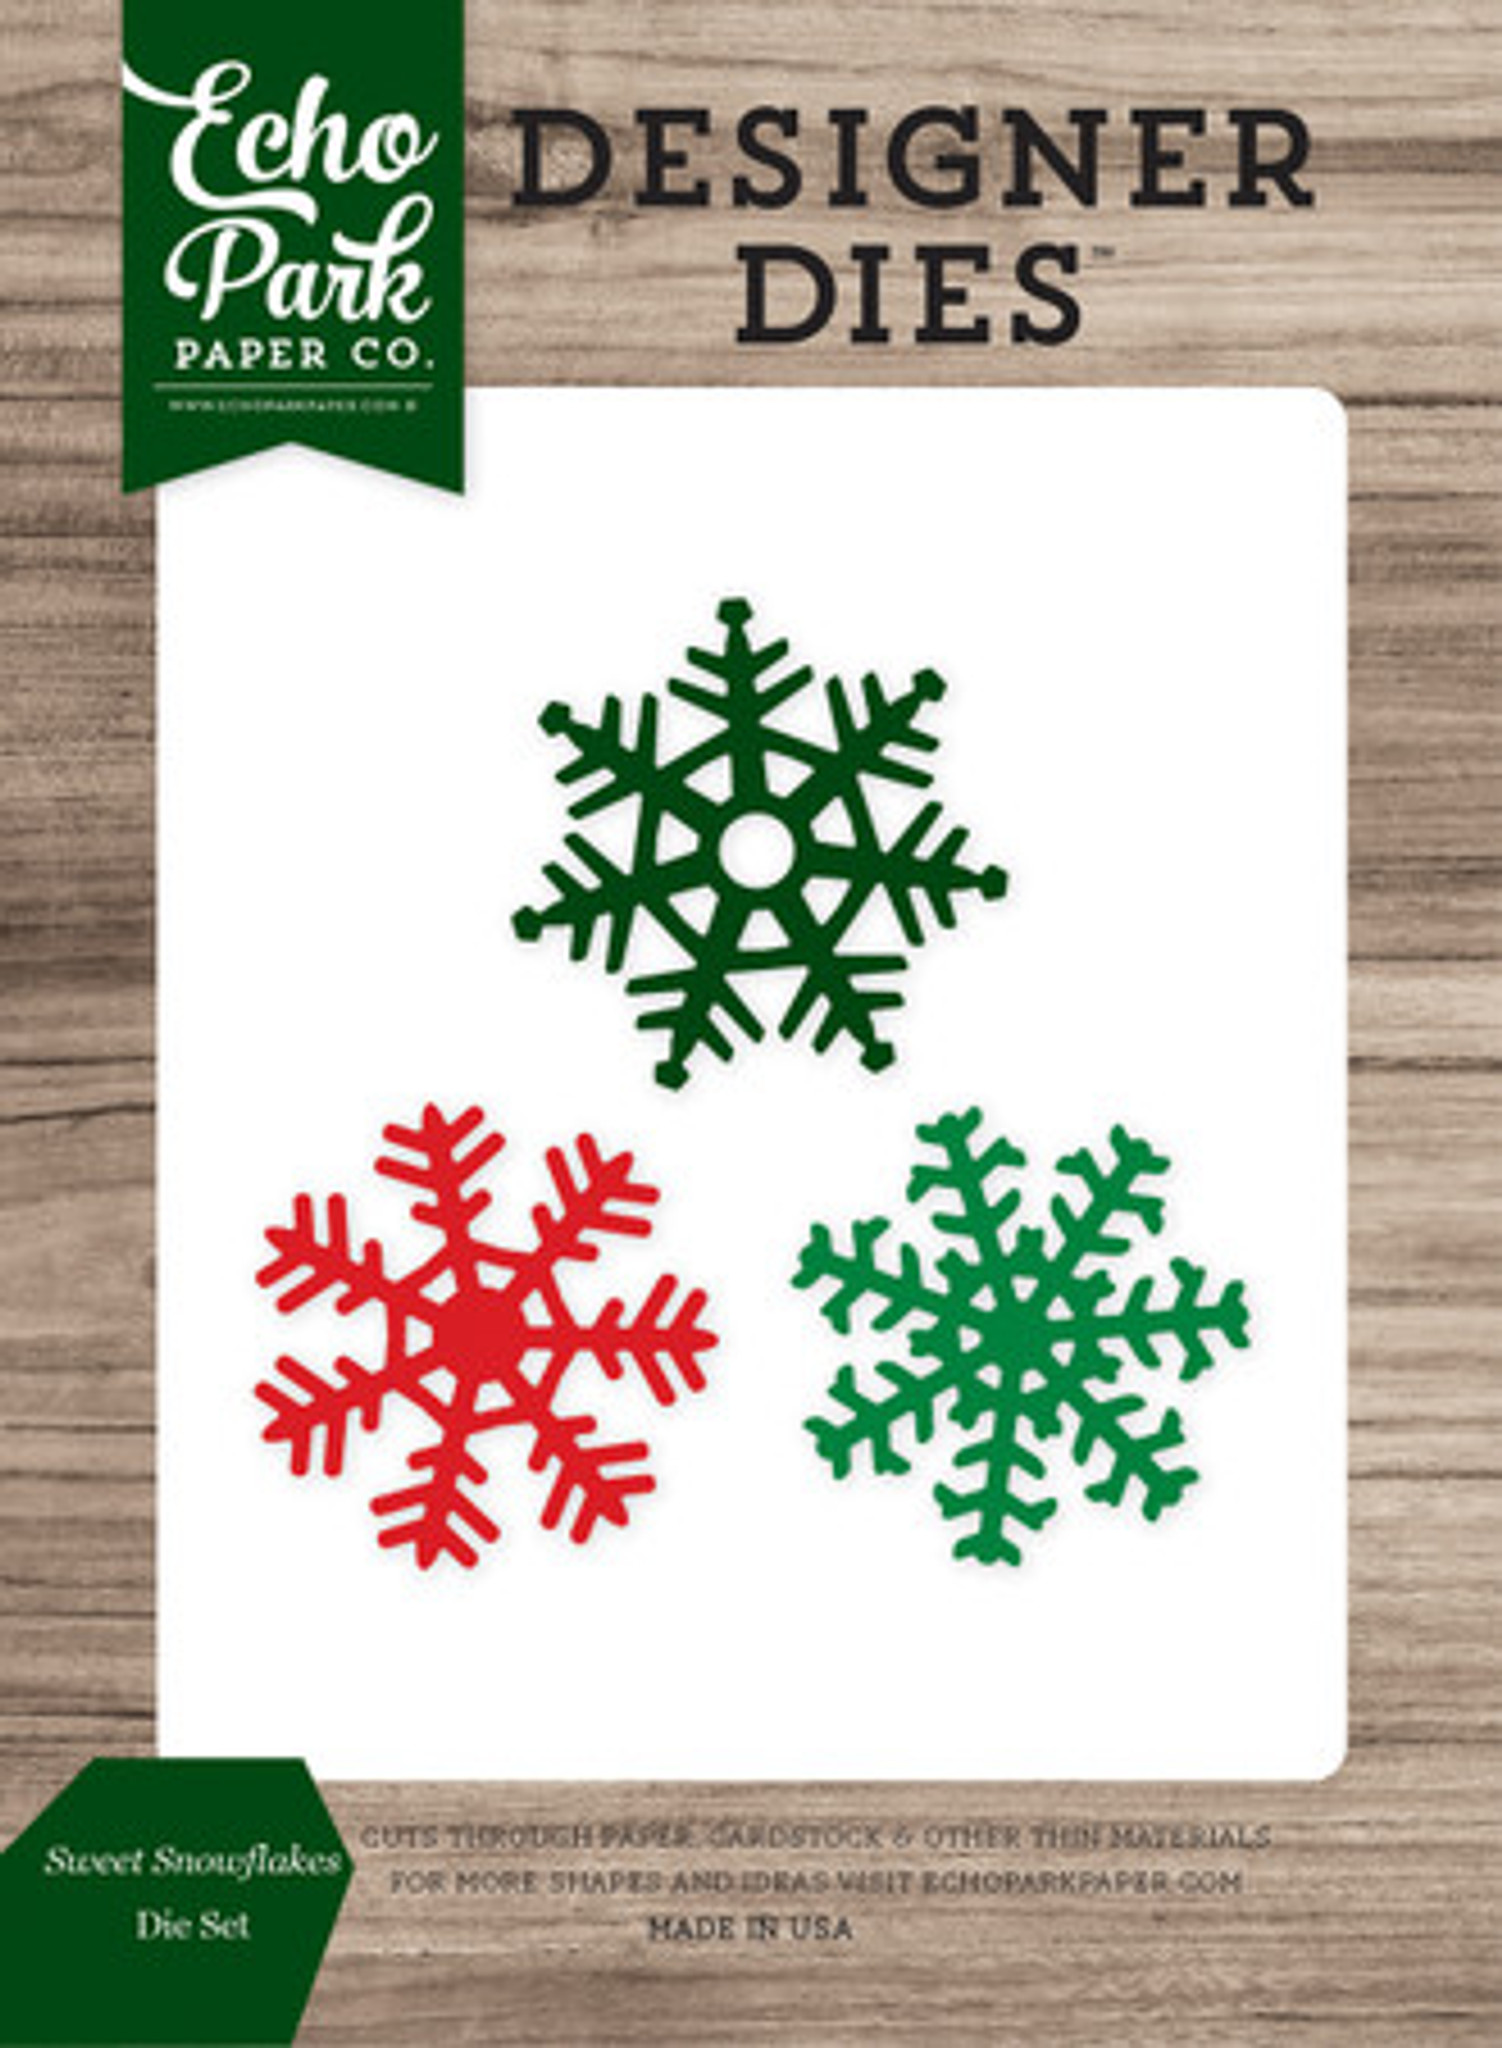 Snowflake #1 - United States Postage Stamp